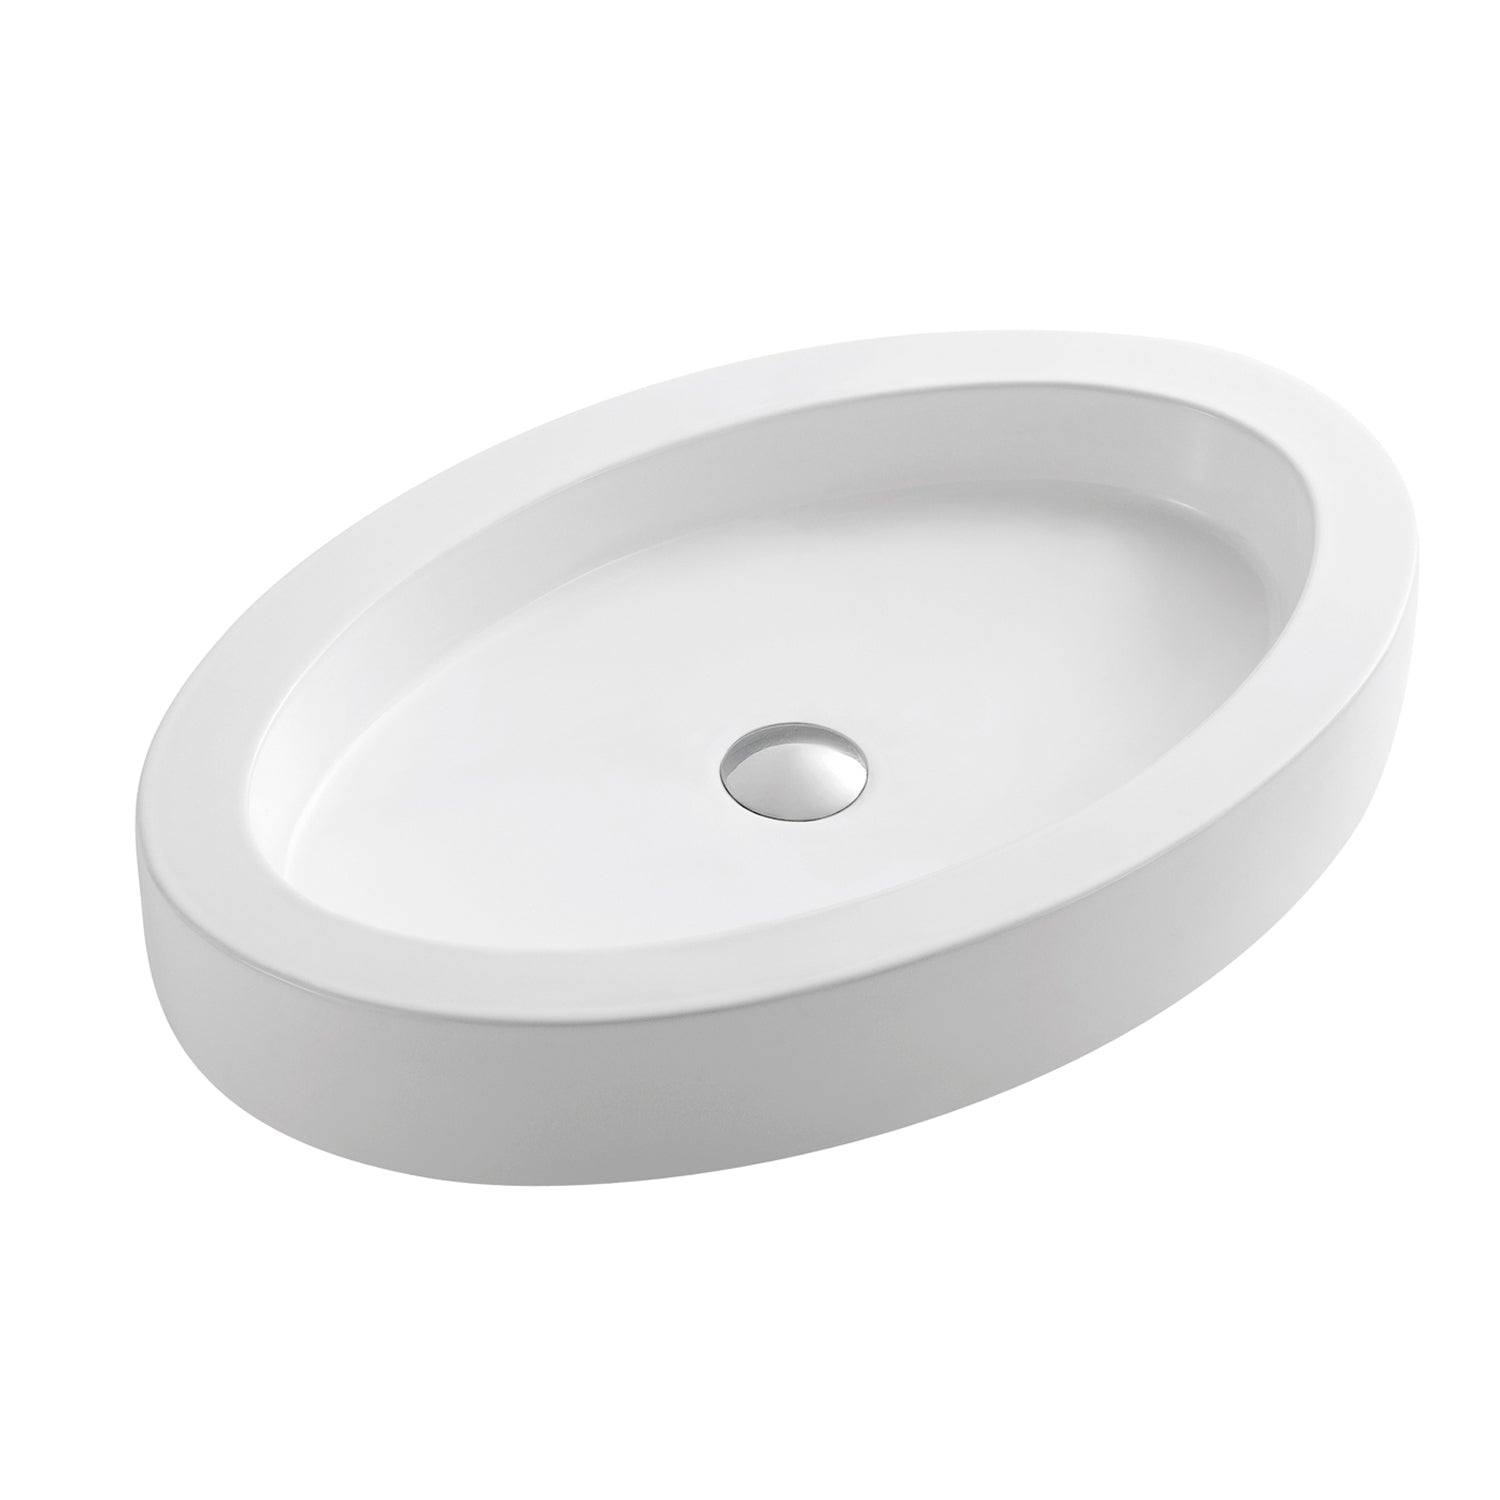 DAX Ceramic Oval Single Bowl Bathroom Vessel Sink, White Finish, 25 x 16-1/3 x 3-1/2 Inches (BSN-CL1219)